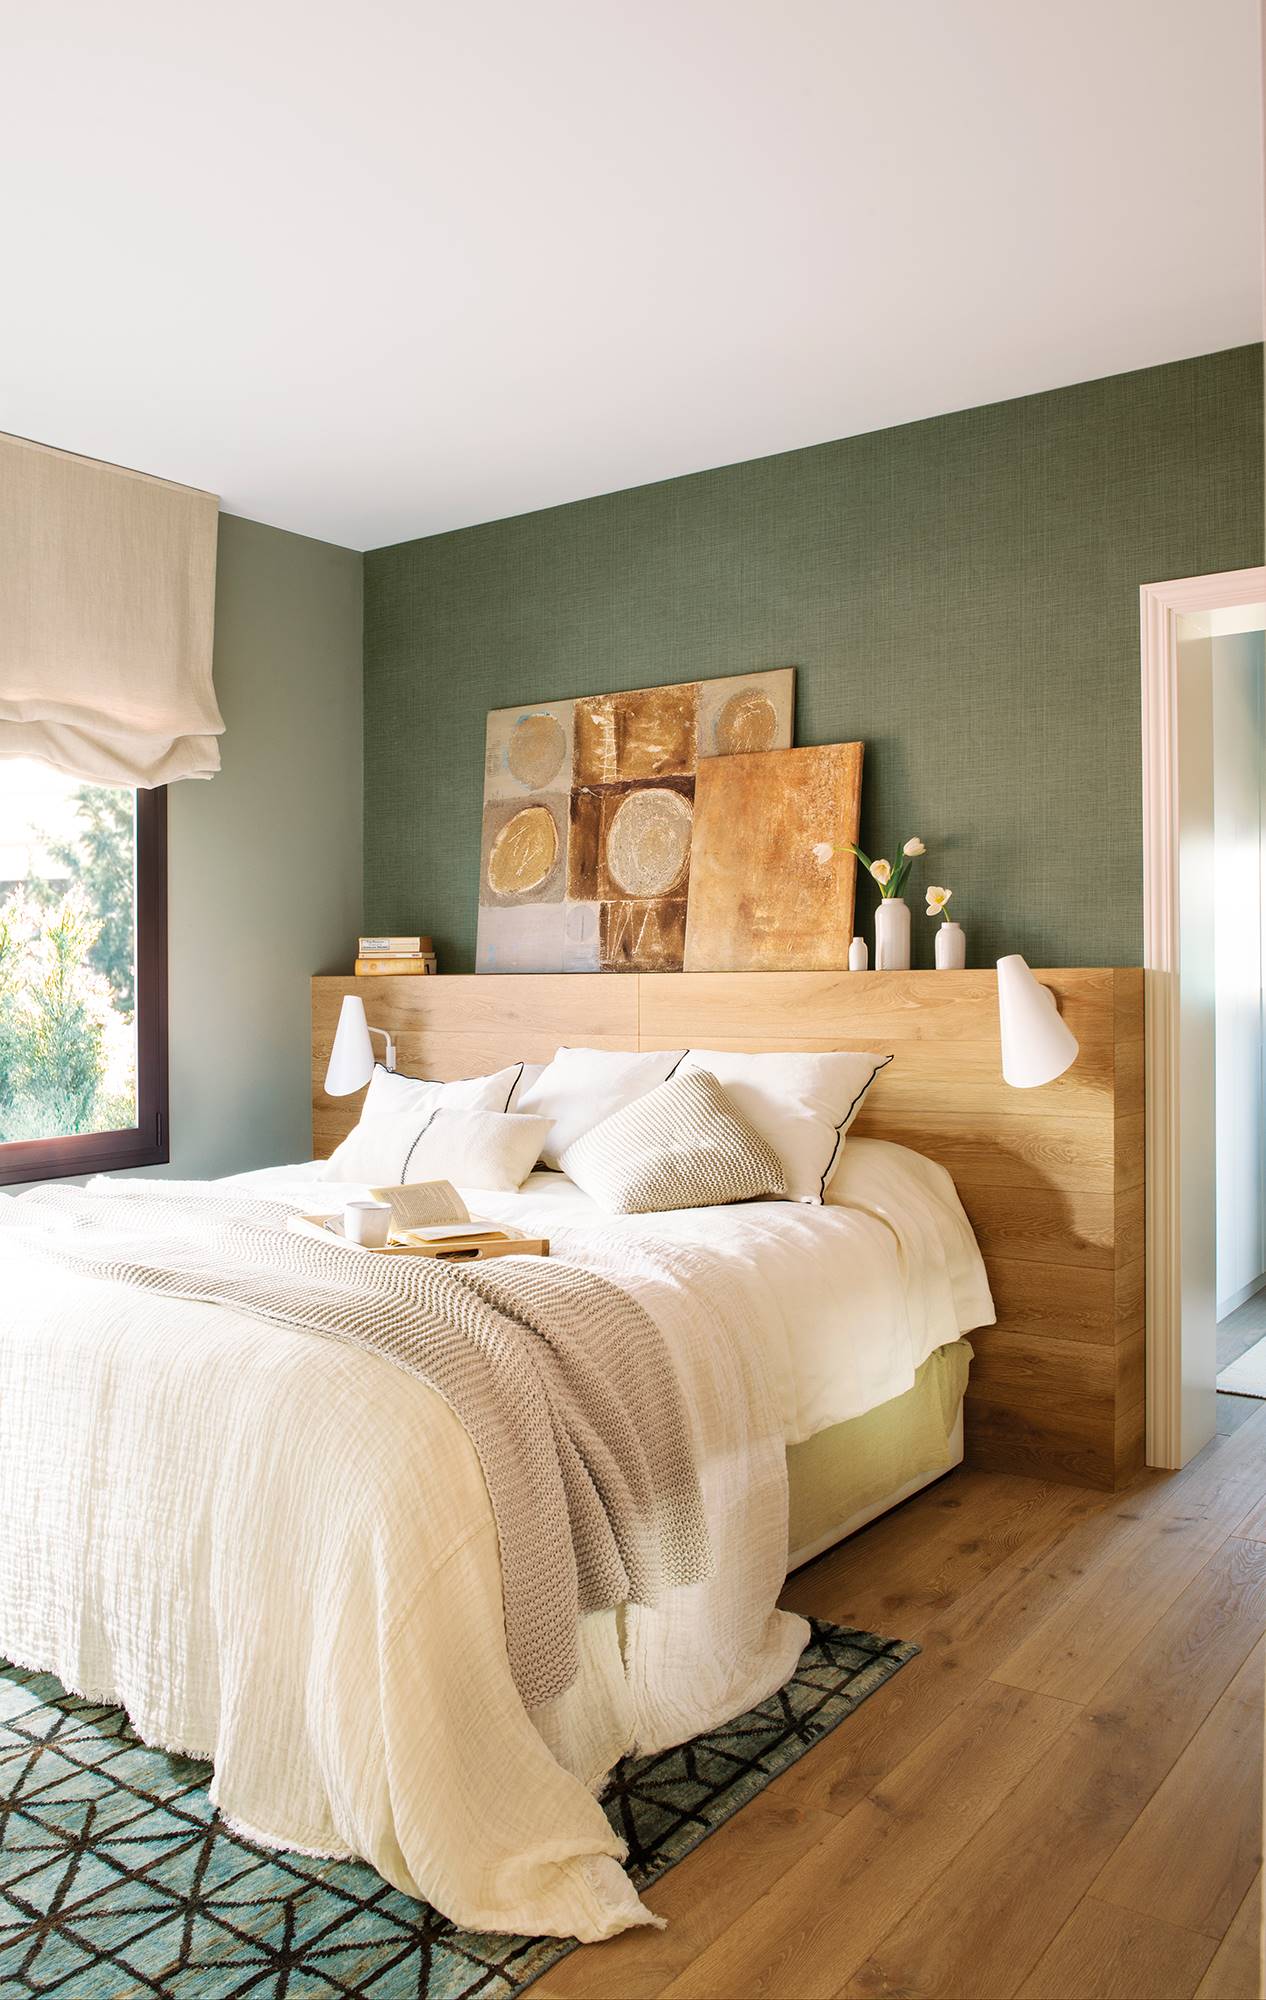 Detalle dormitorio con cuadros en tonos oxidados.